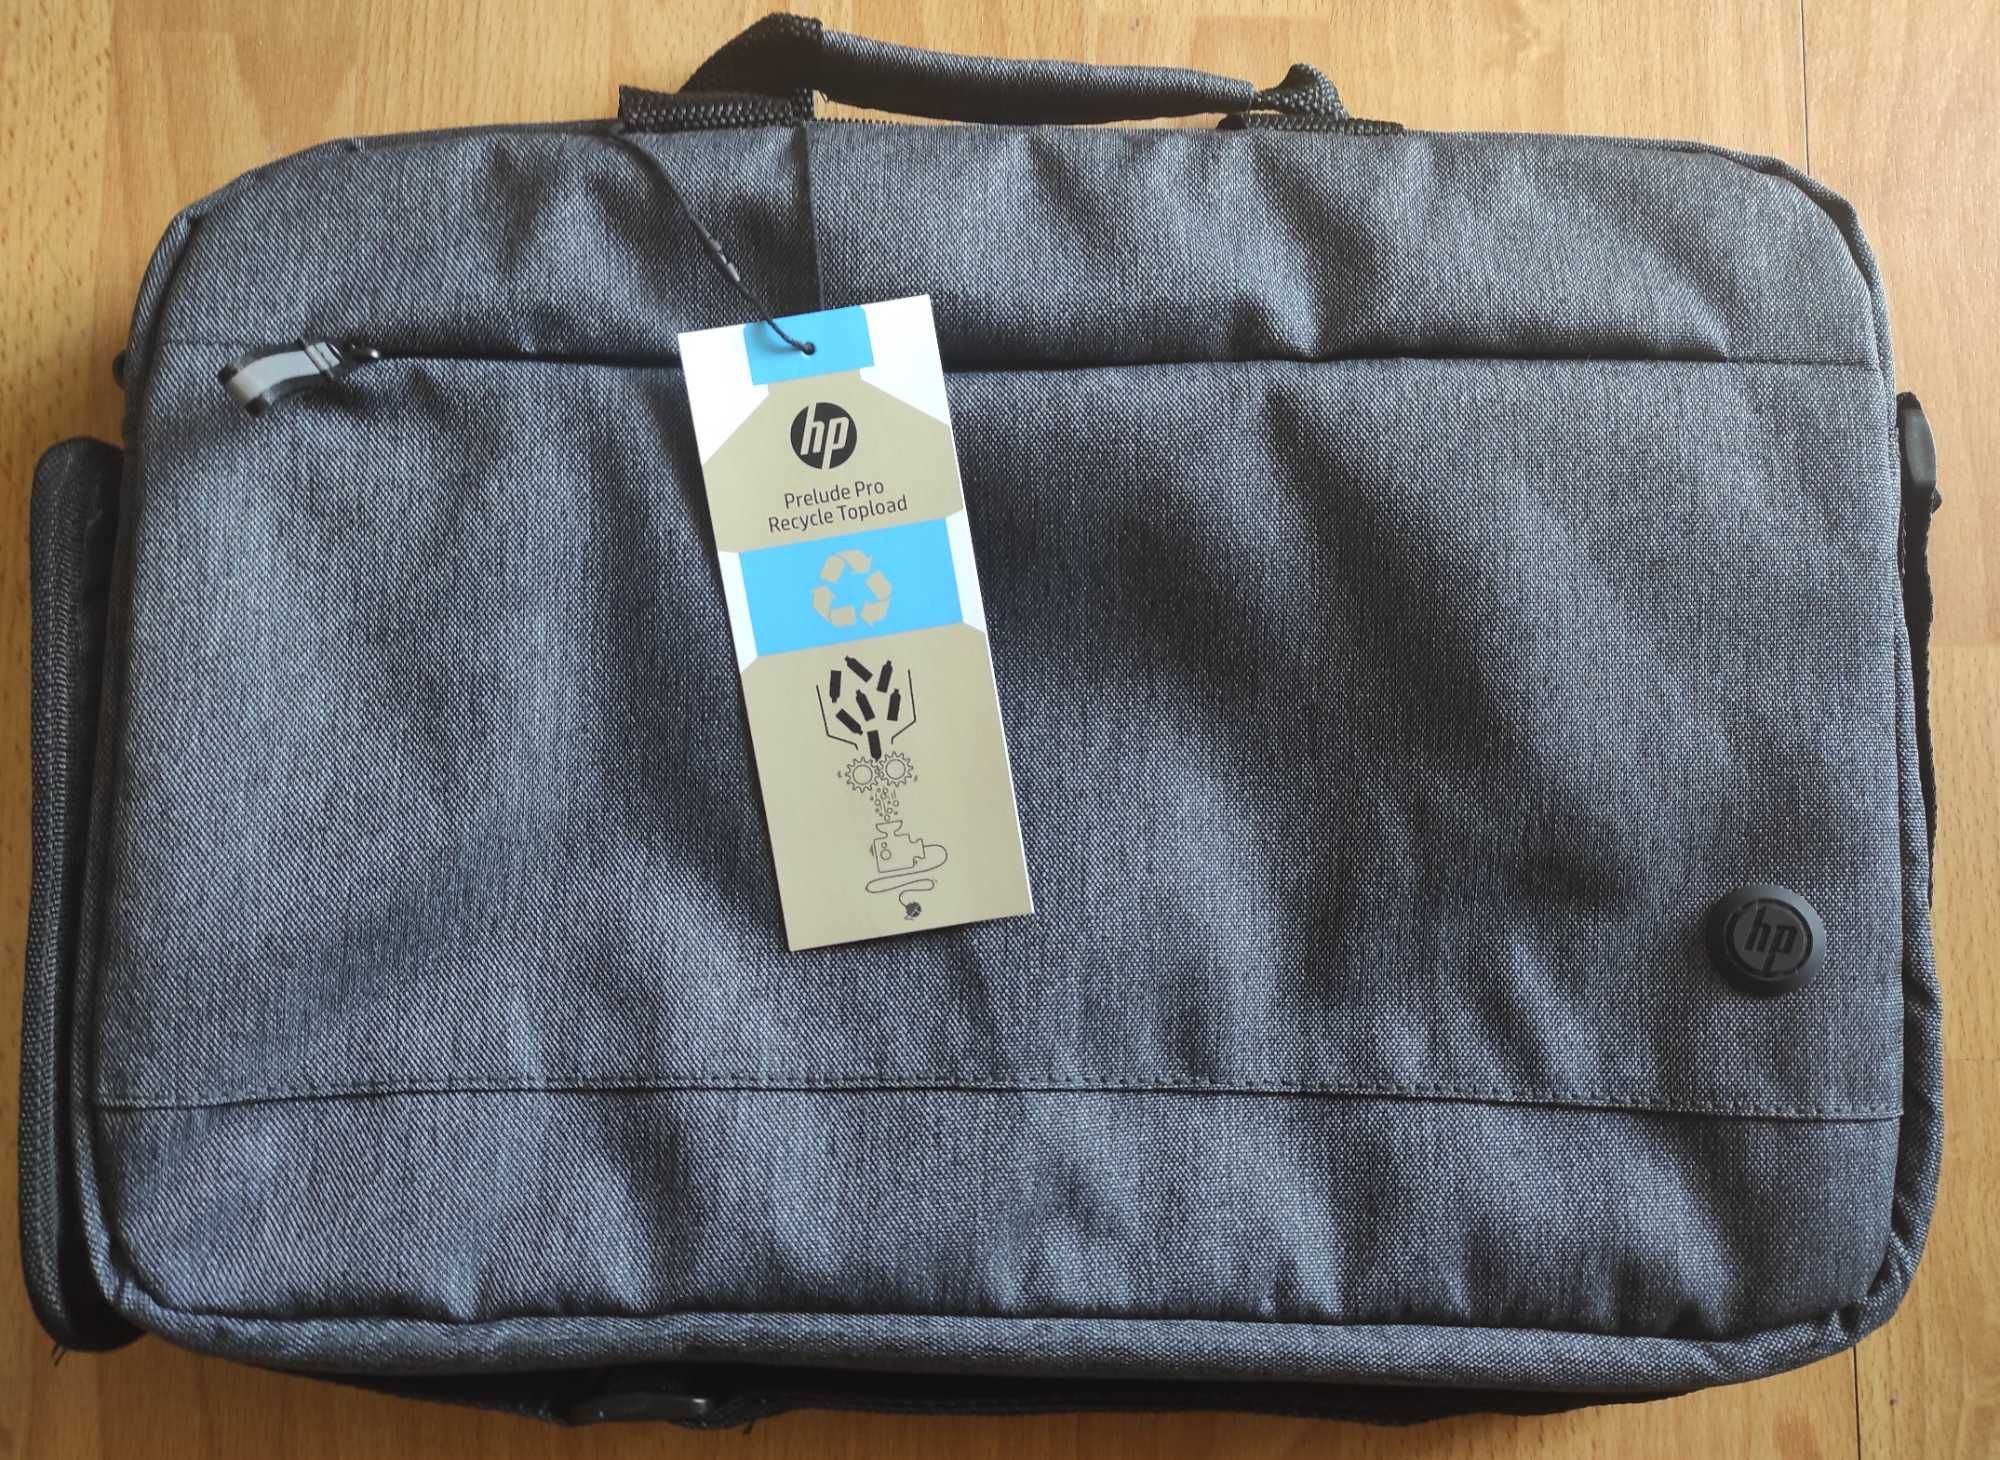 torba na laptopa HP 15,6 cal 39,5 cm Prelude Pro Recycle Topload 645AA